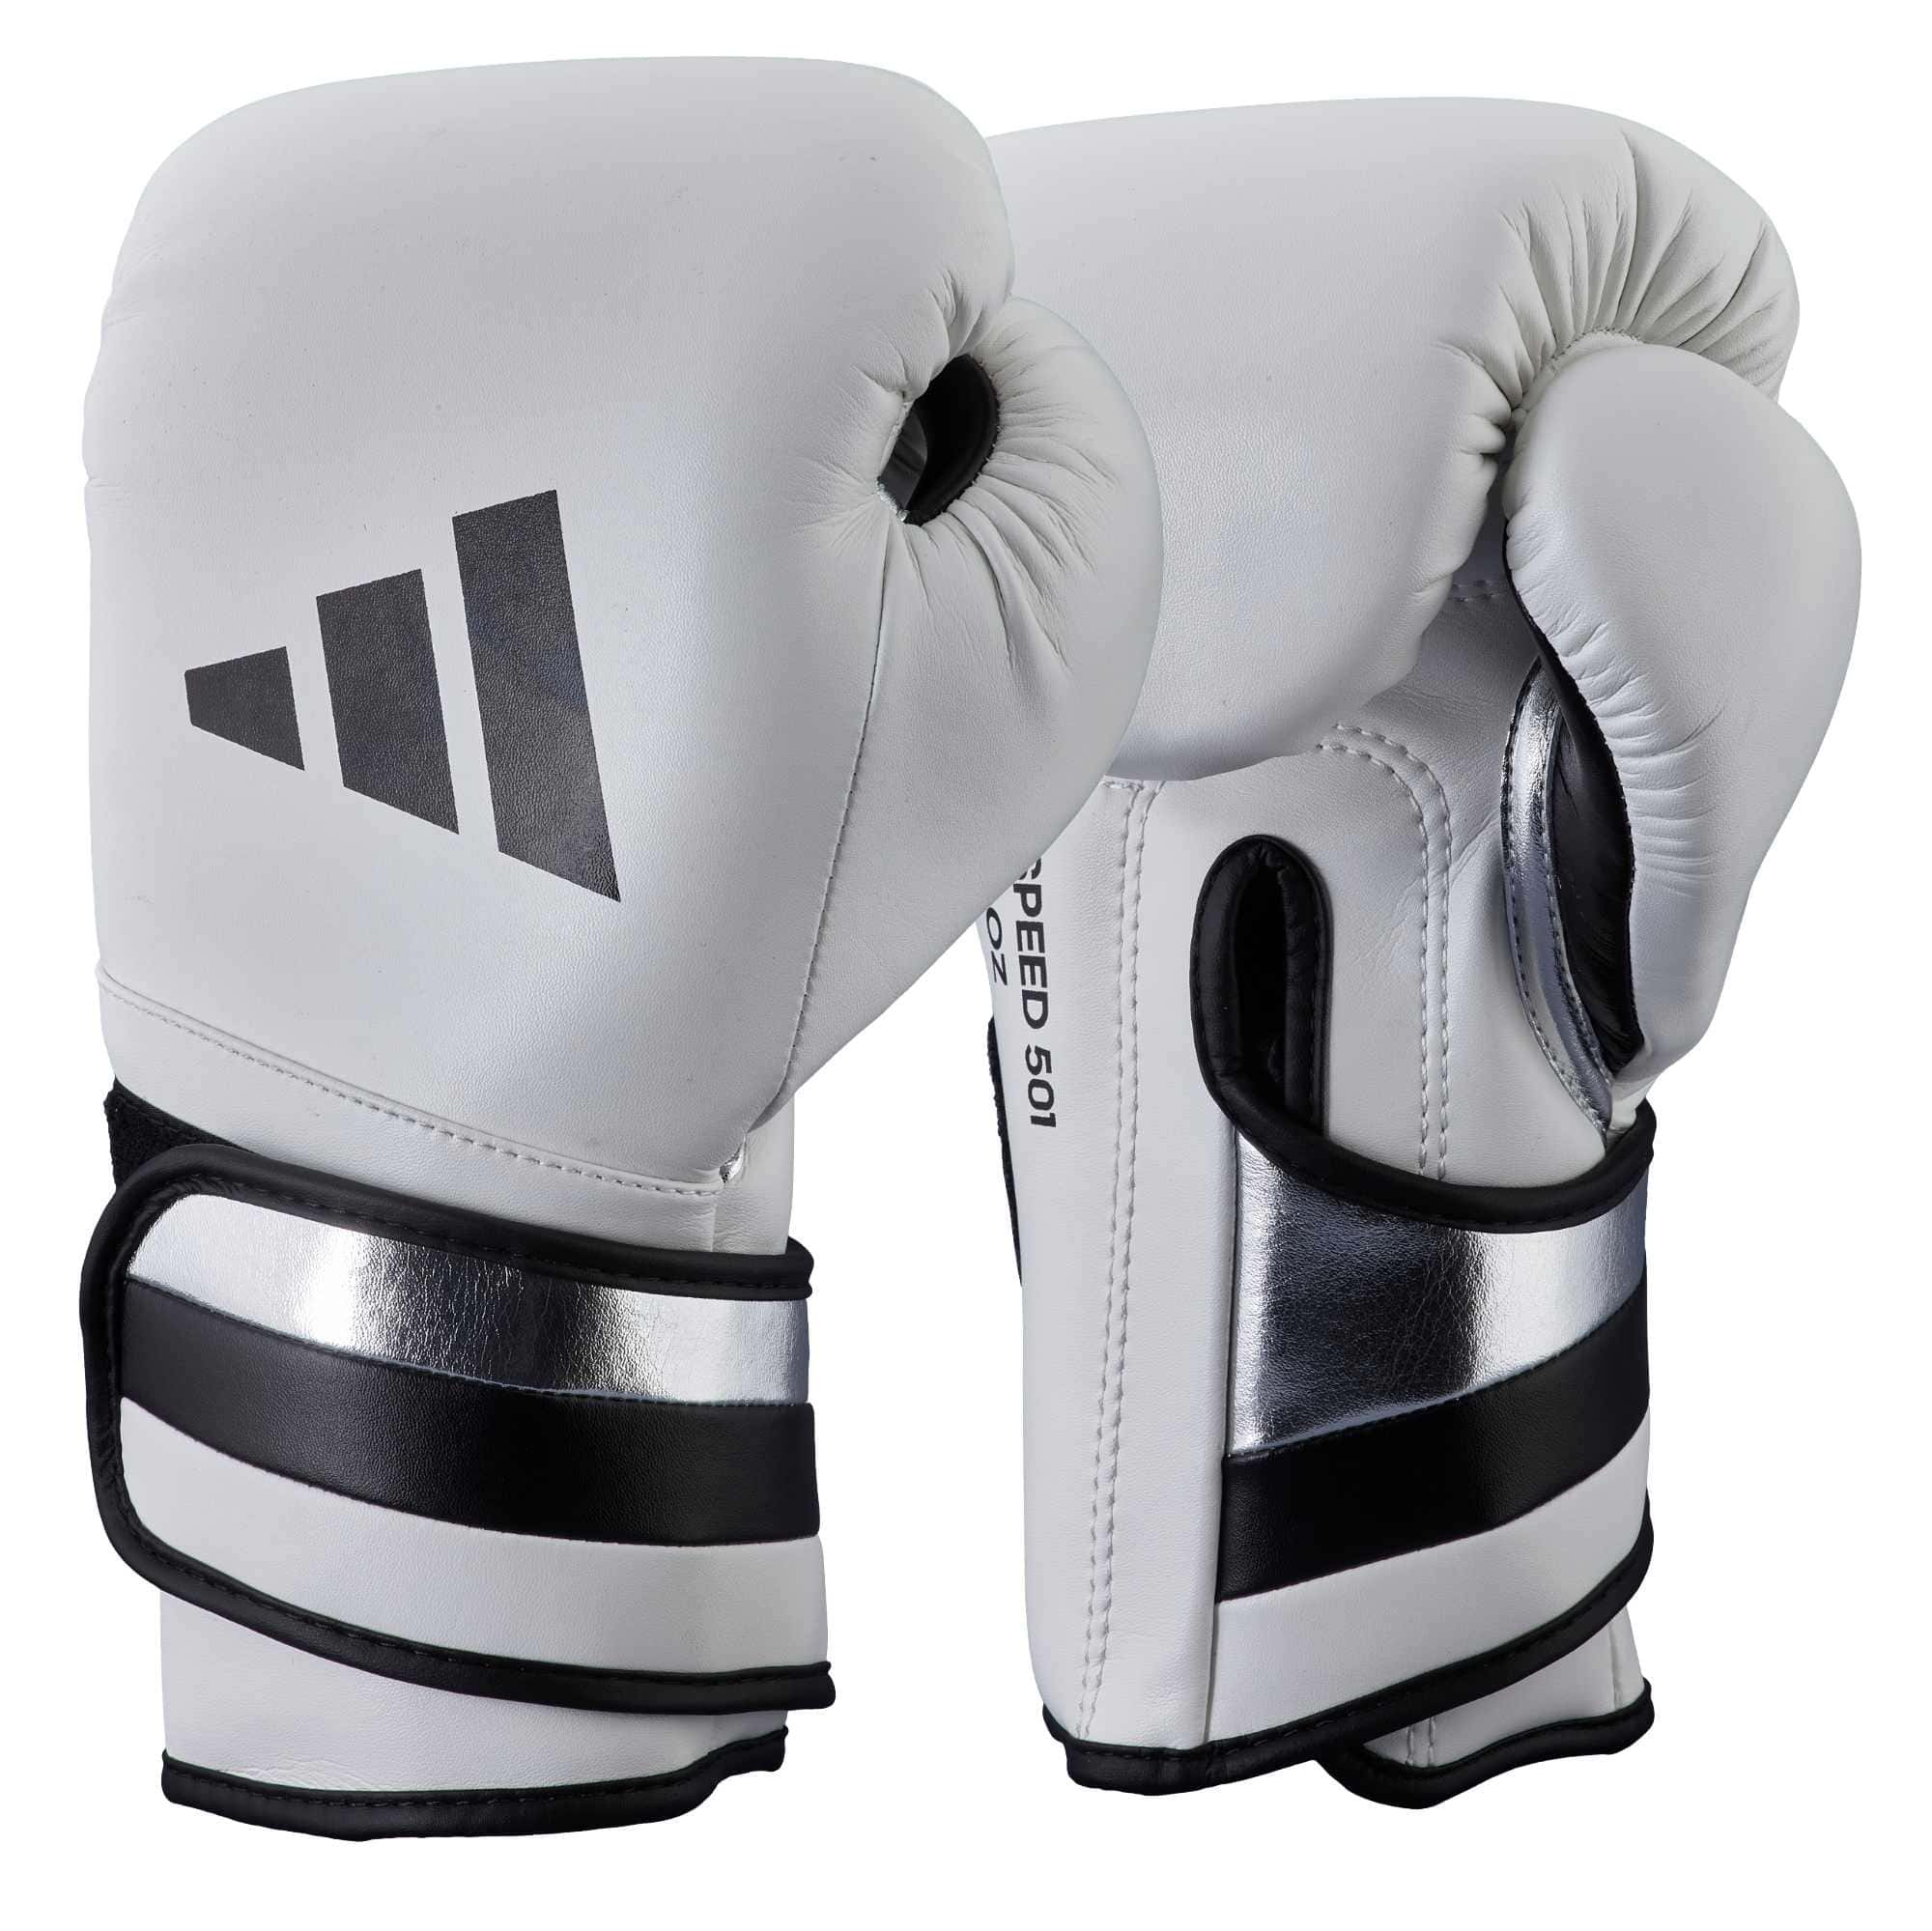 Buy ADIDAS emparor 500 - White/Black ✓ SPEED Online Gloves Boxing Fight Shop